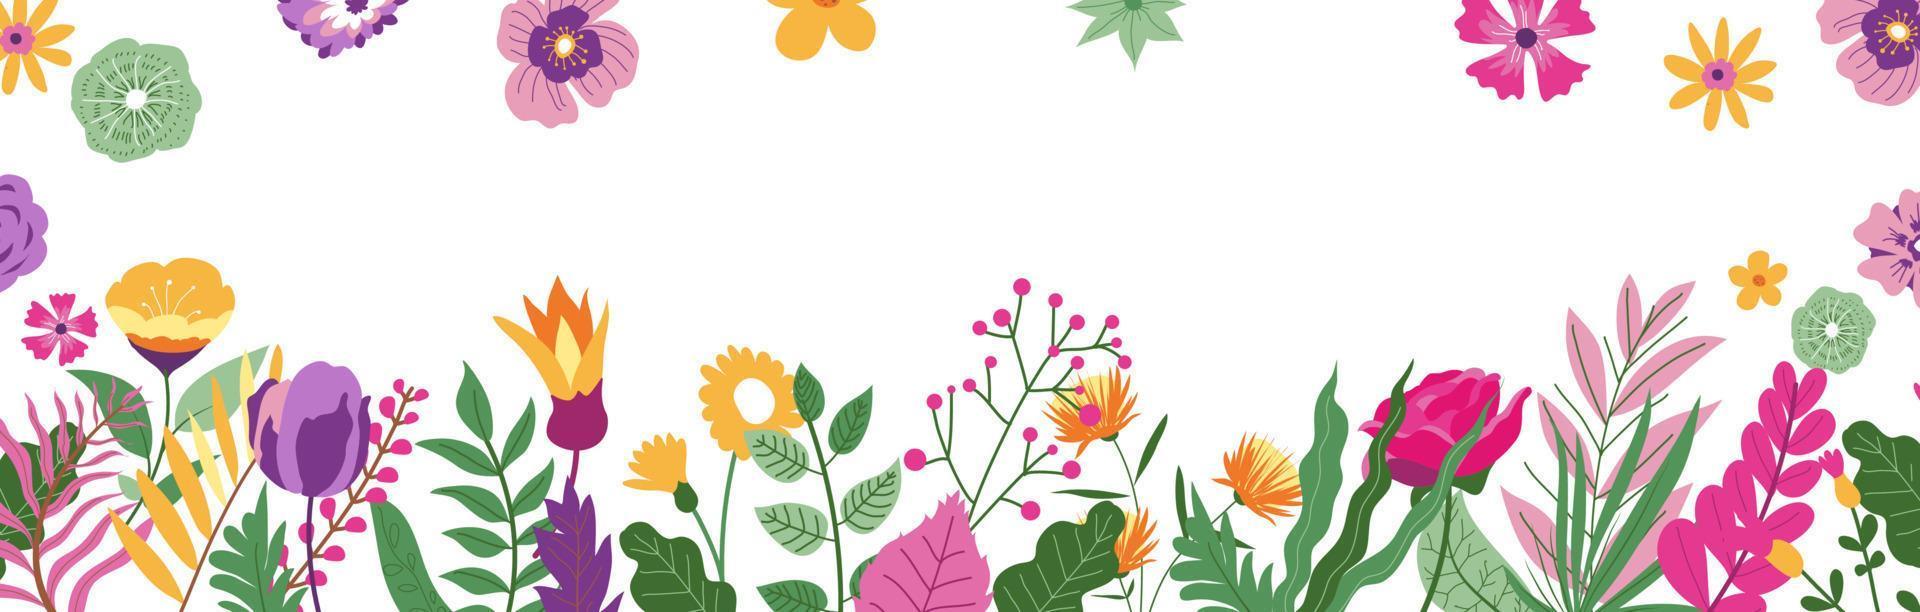 Summer or spring blooming, banner or floral frame vector